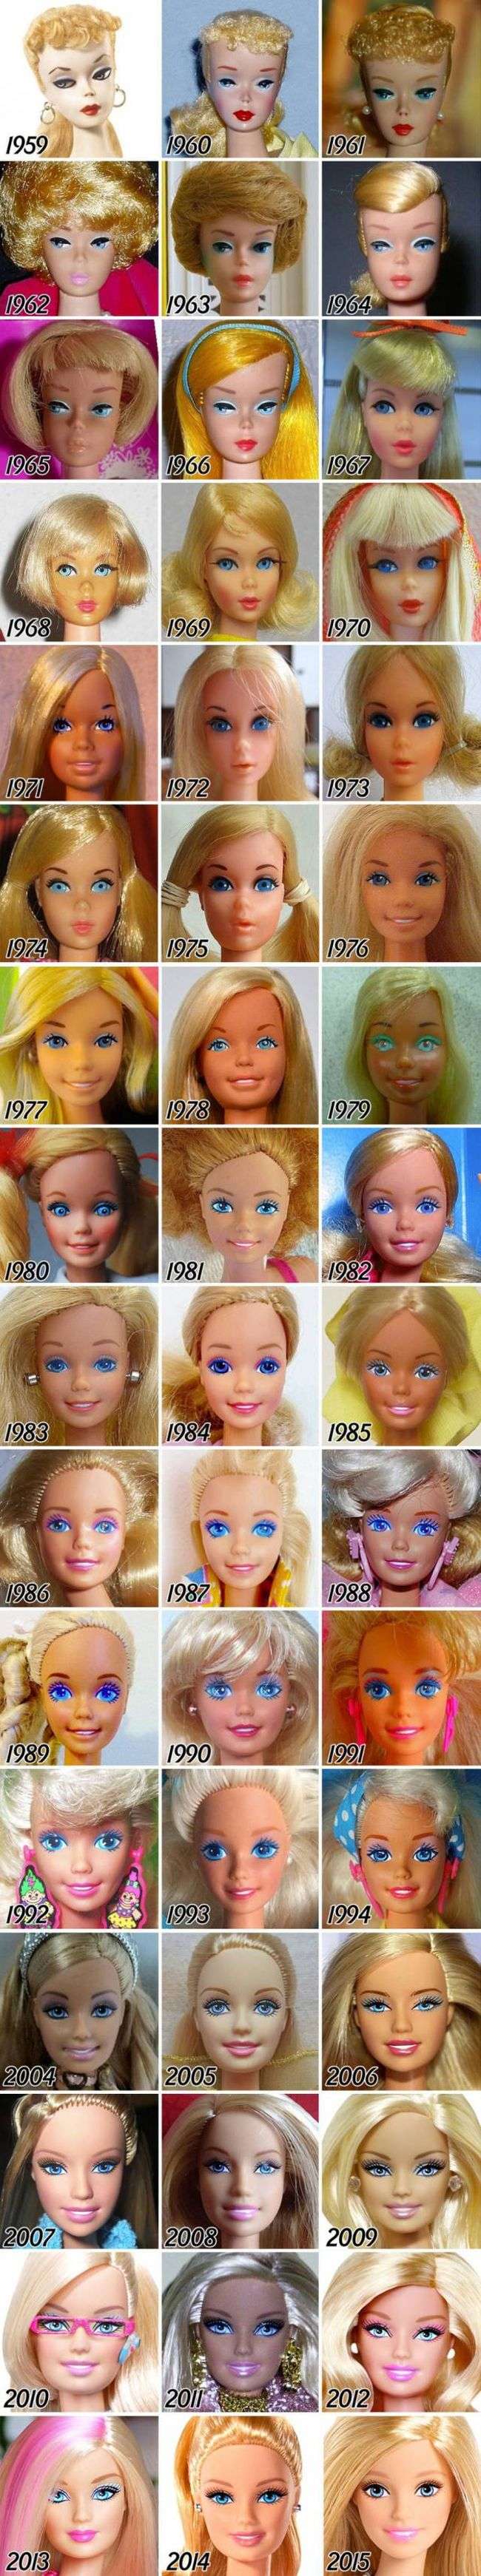 Как изменилась кукла Барби за 58 лет